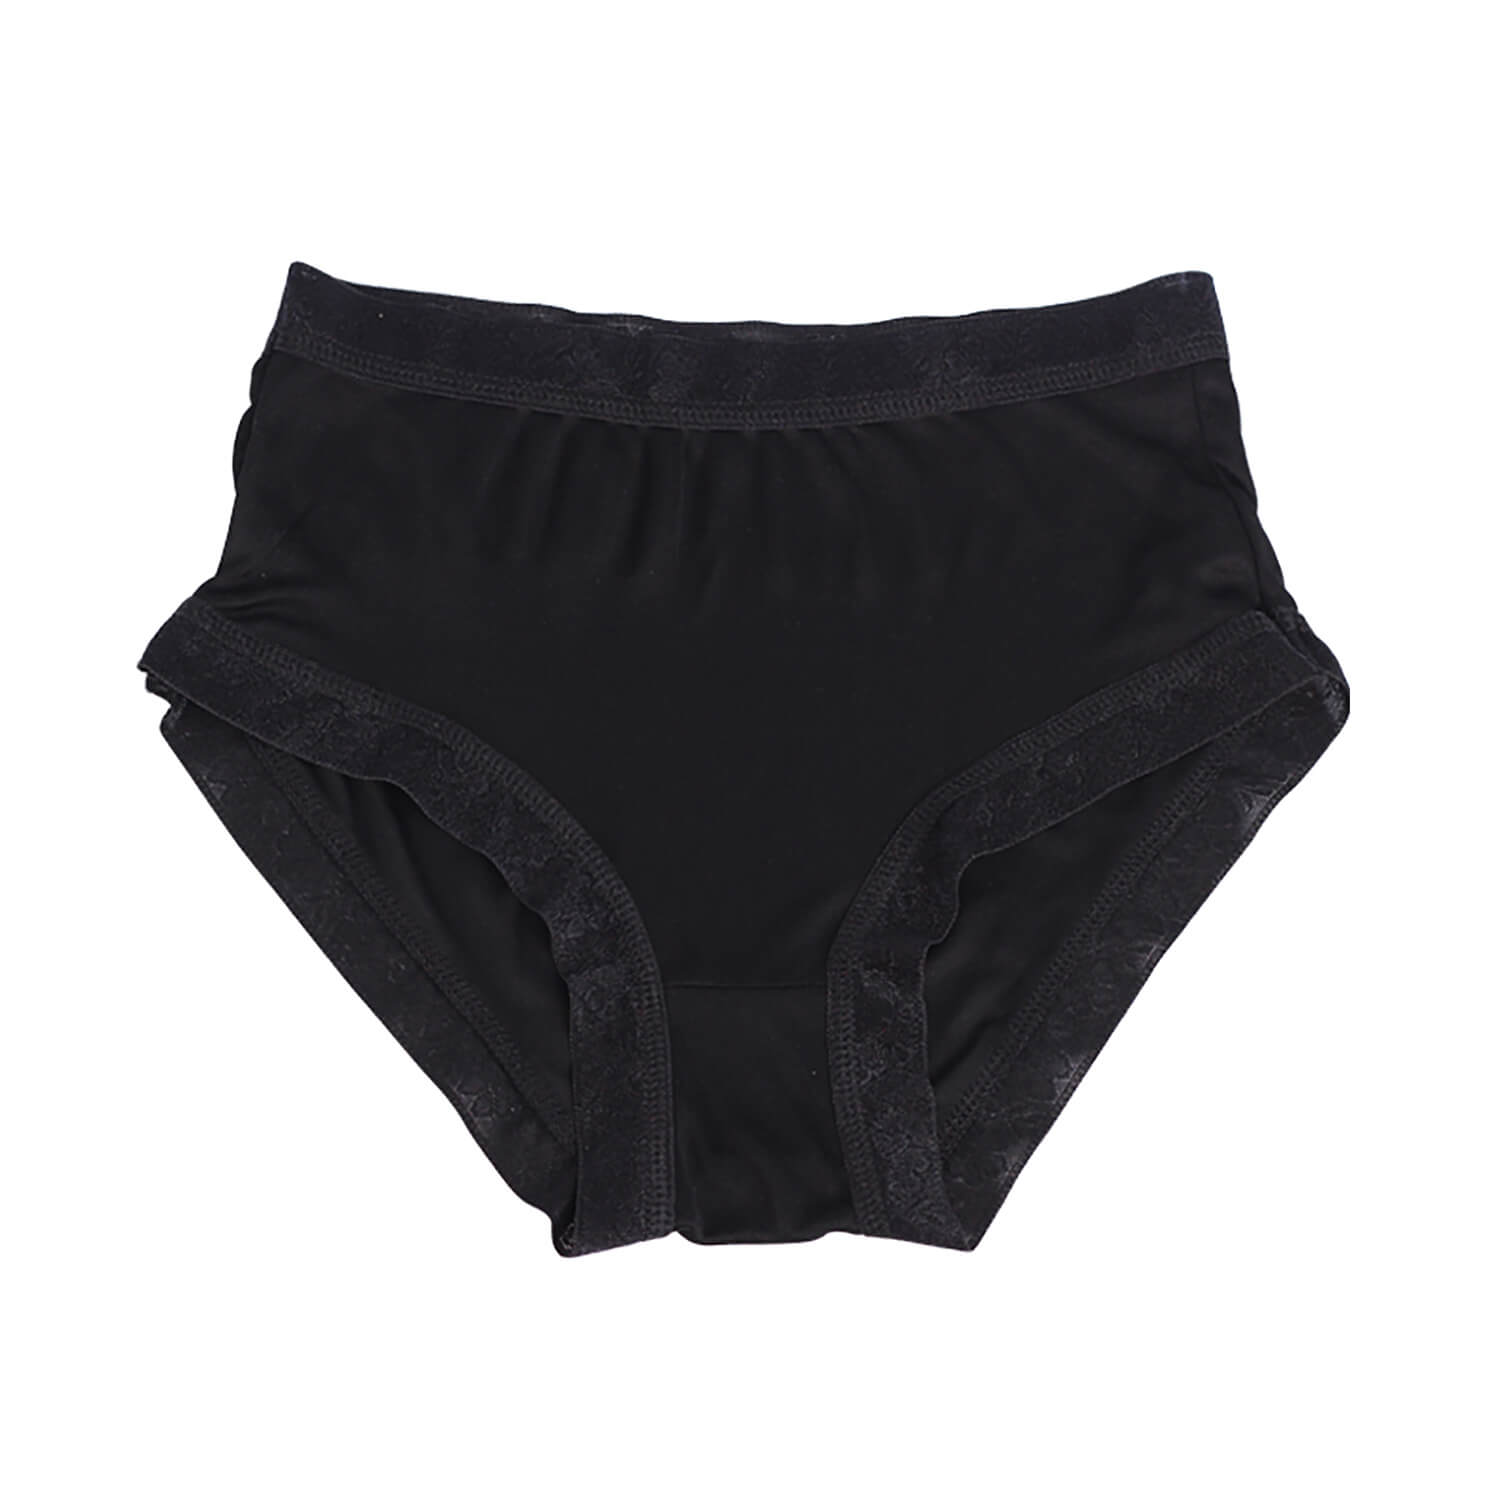 Mulberry silk boxer briefs for women breathable silk lace mid-waist briefs shorts - slipintosoft